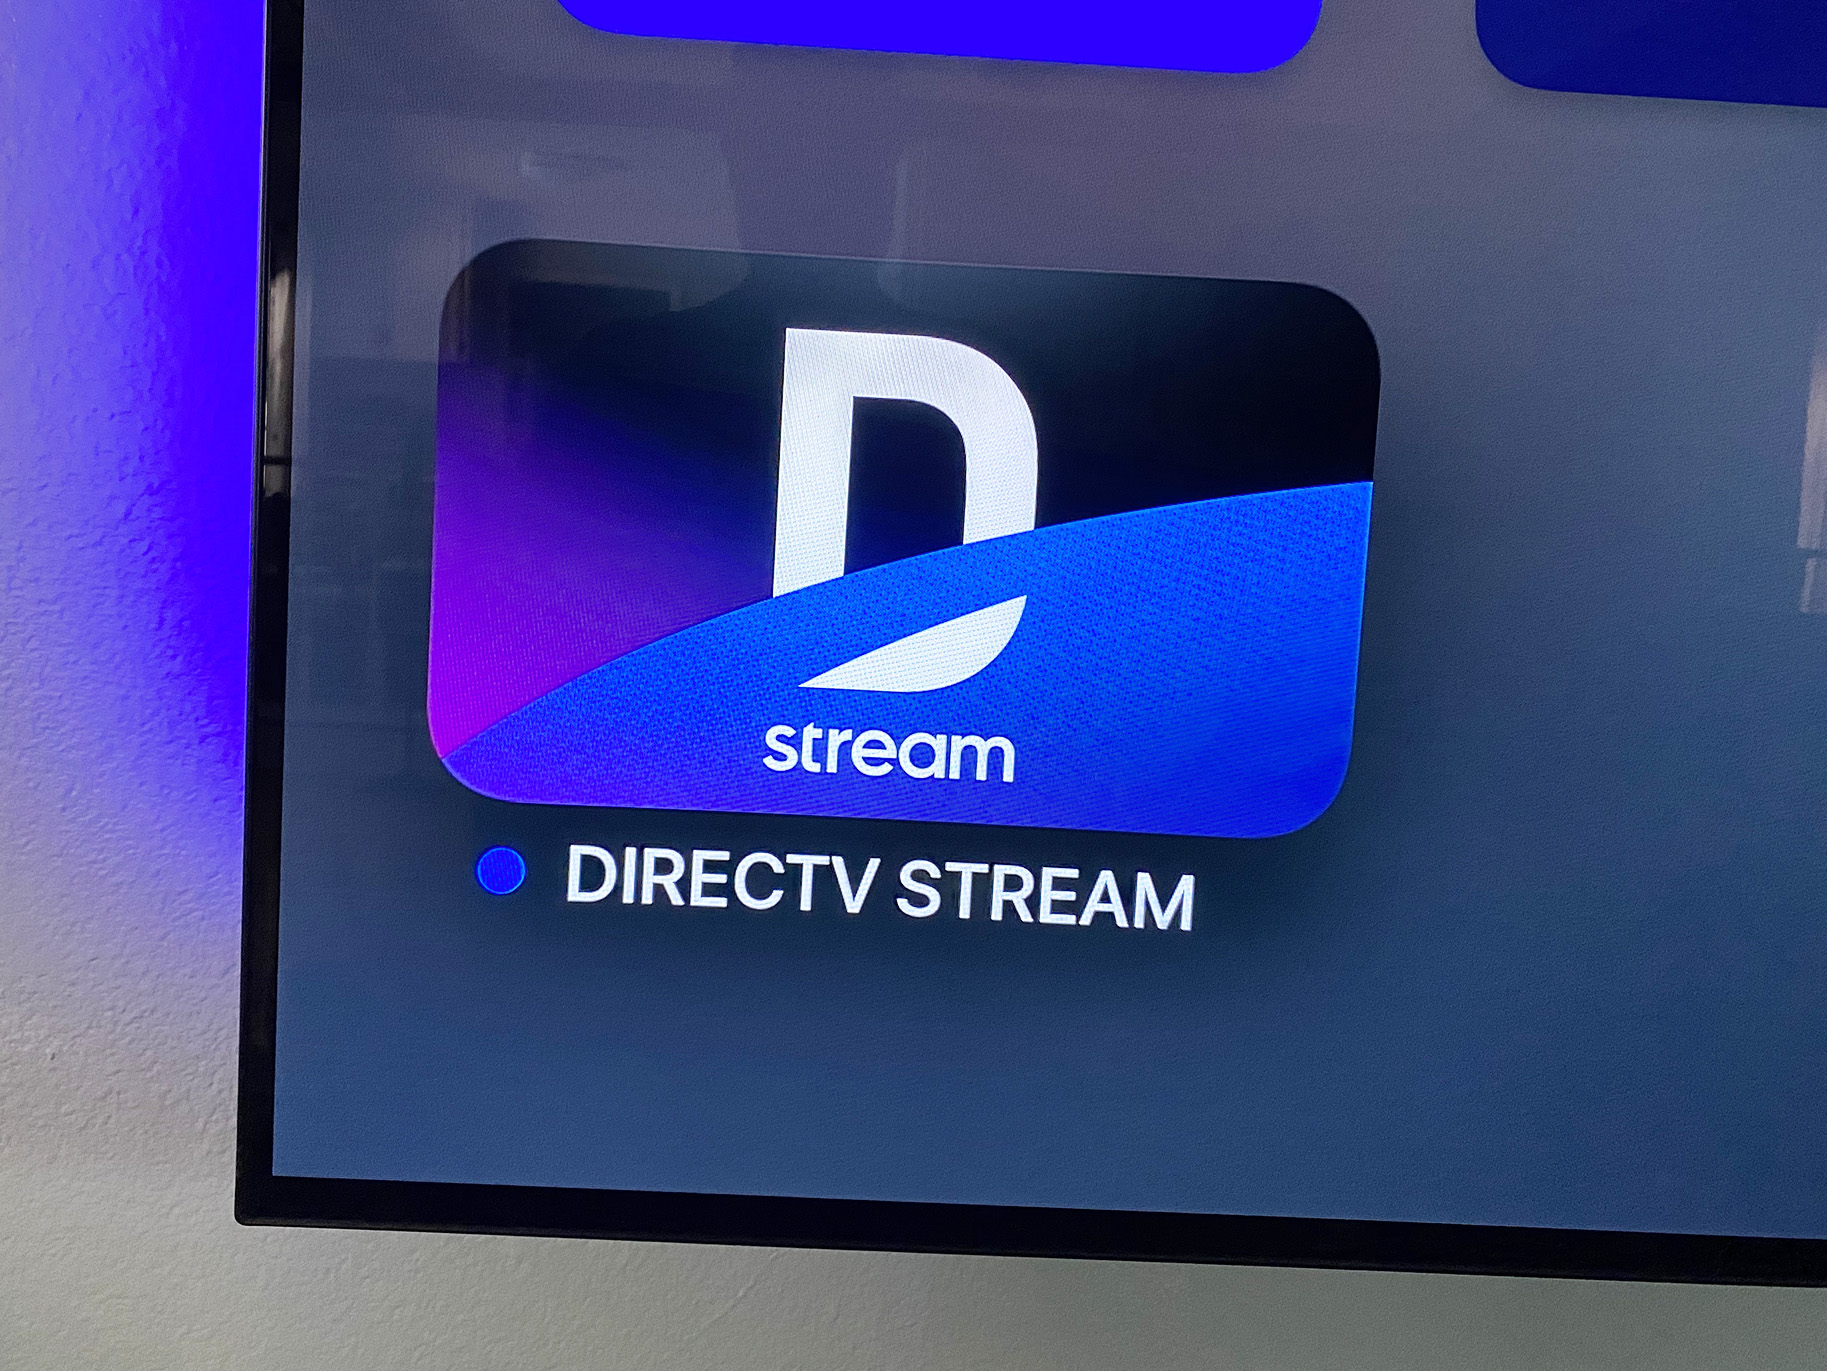 no nfl network on directv stream